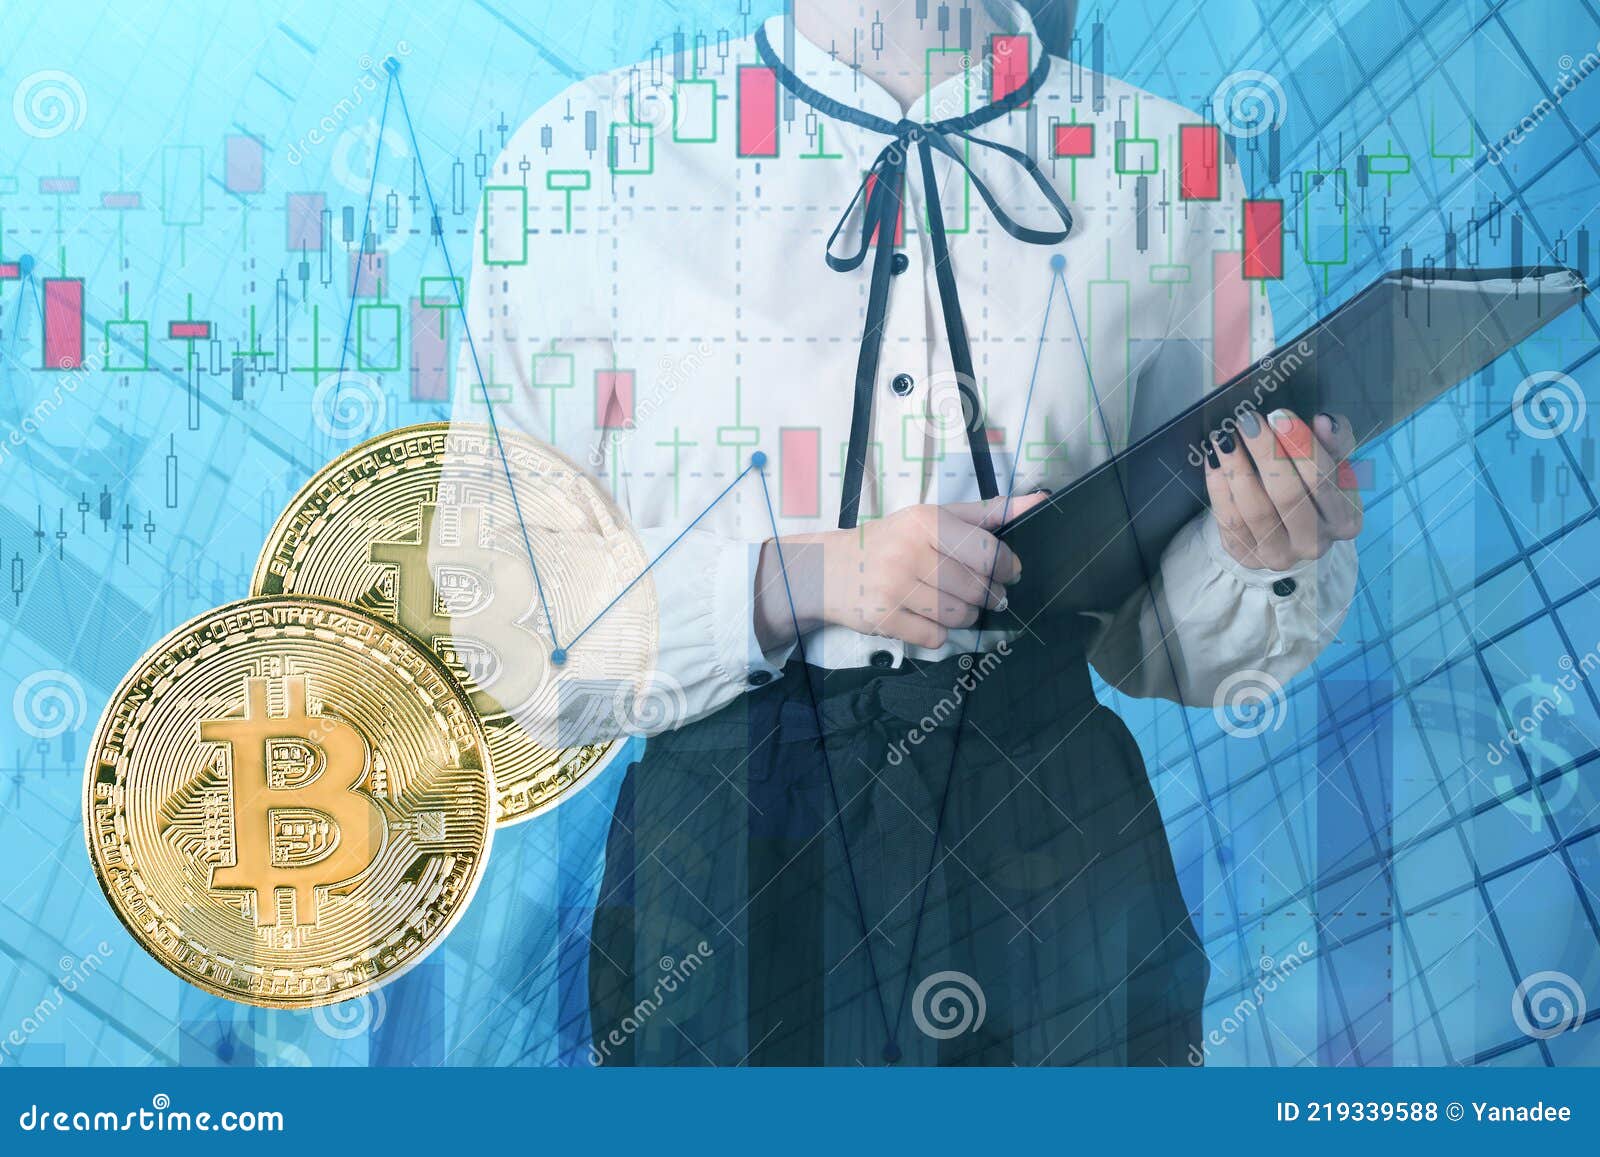 Bitcoin-Investition per Telegramm Bitcoin Investor Tool 2 Jahre MA Multiplikator